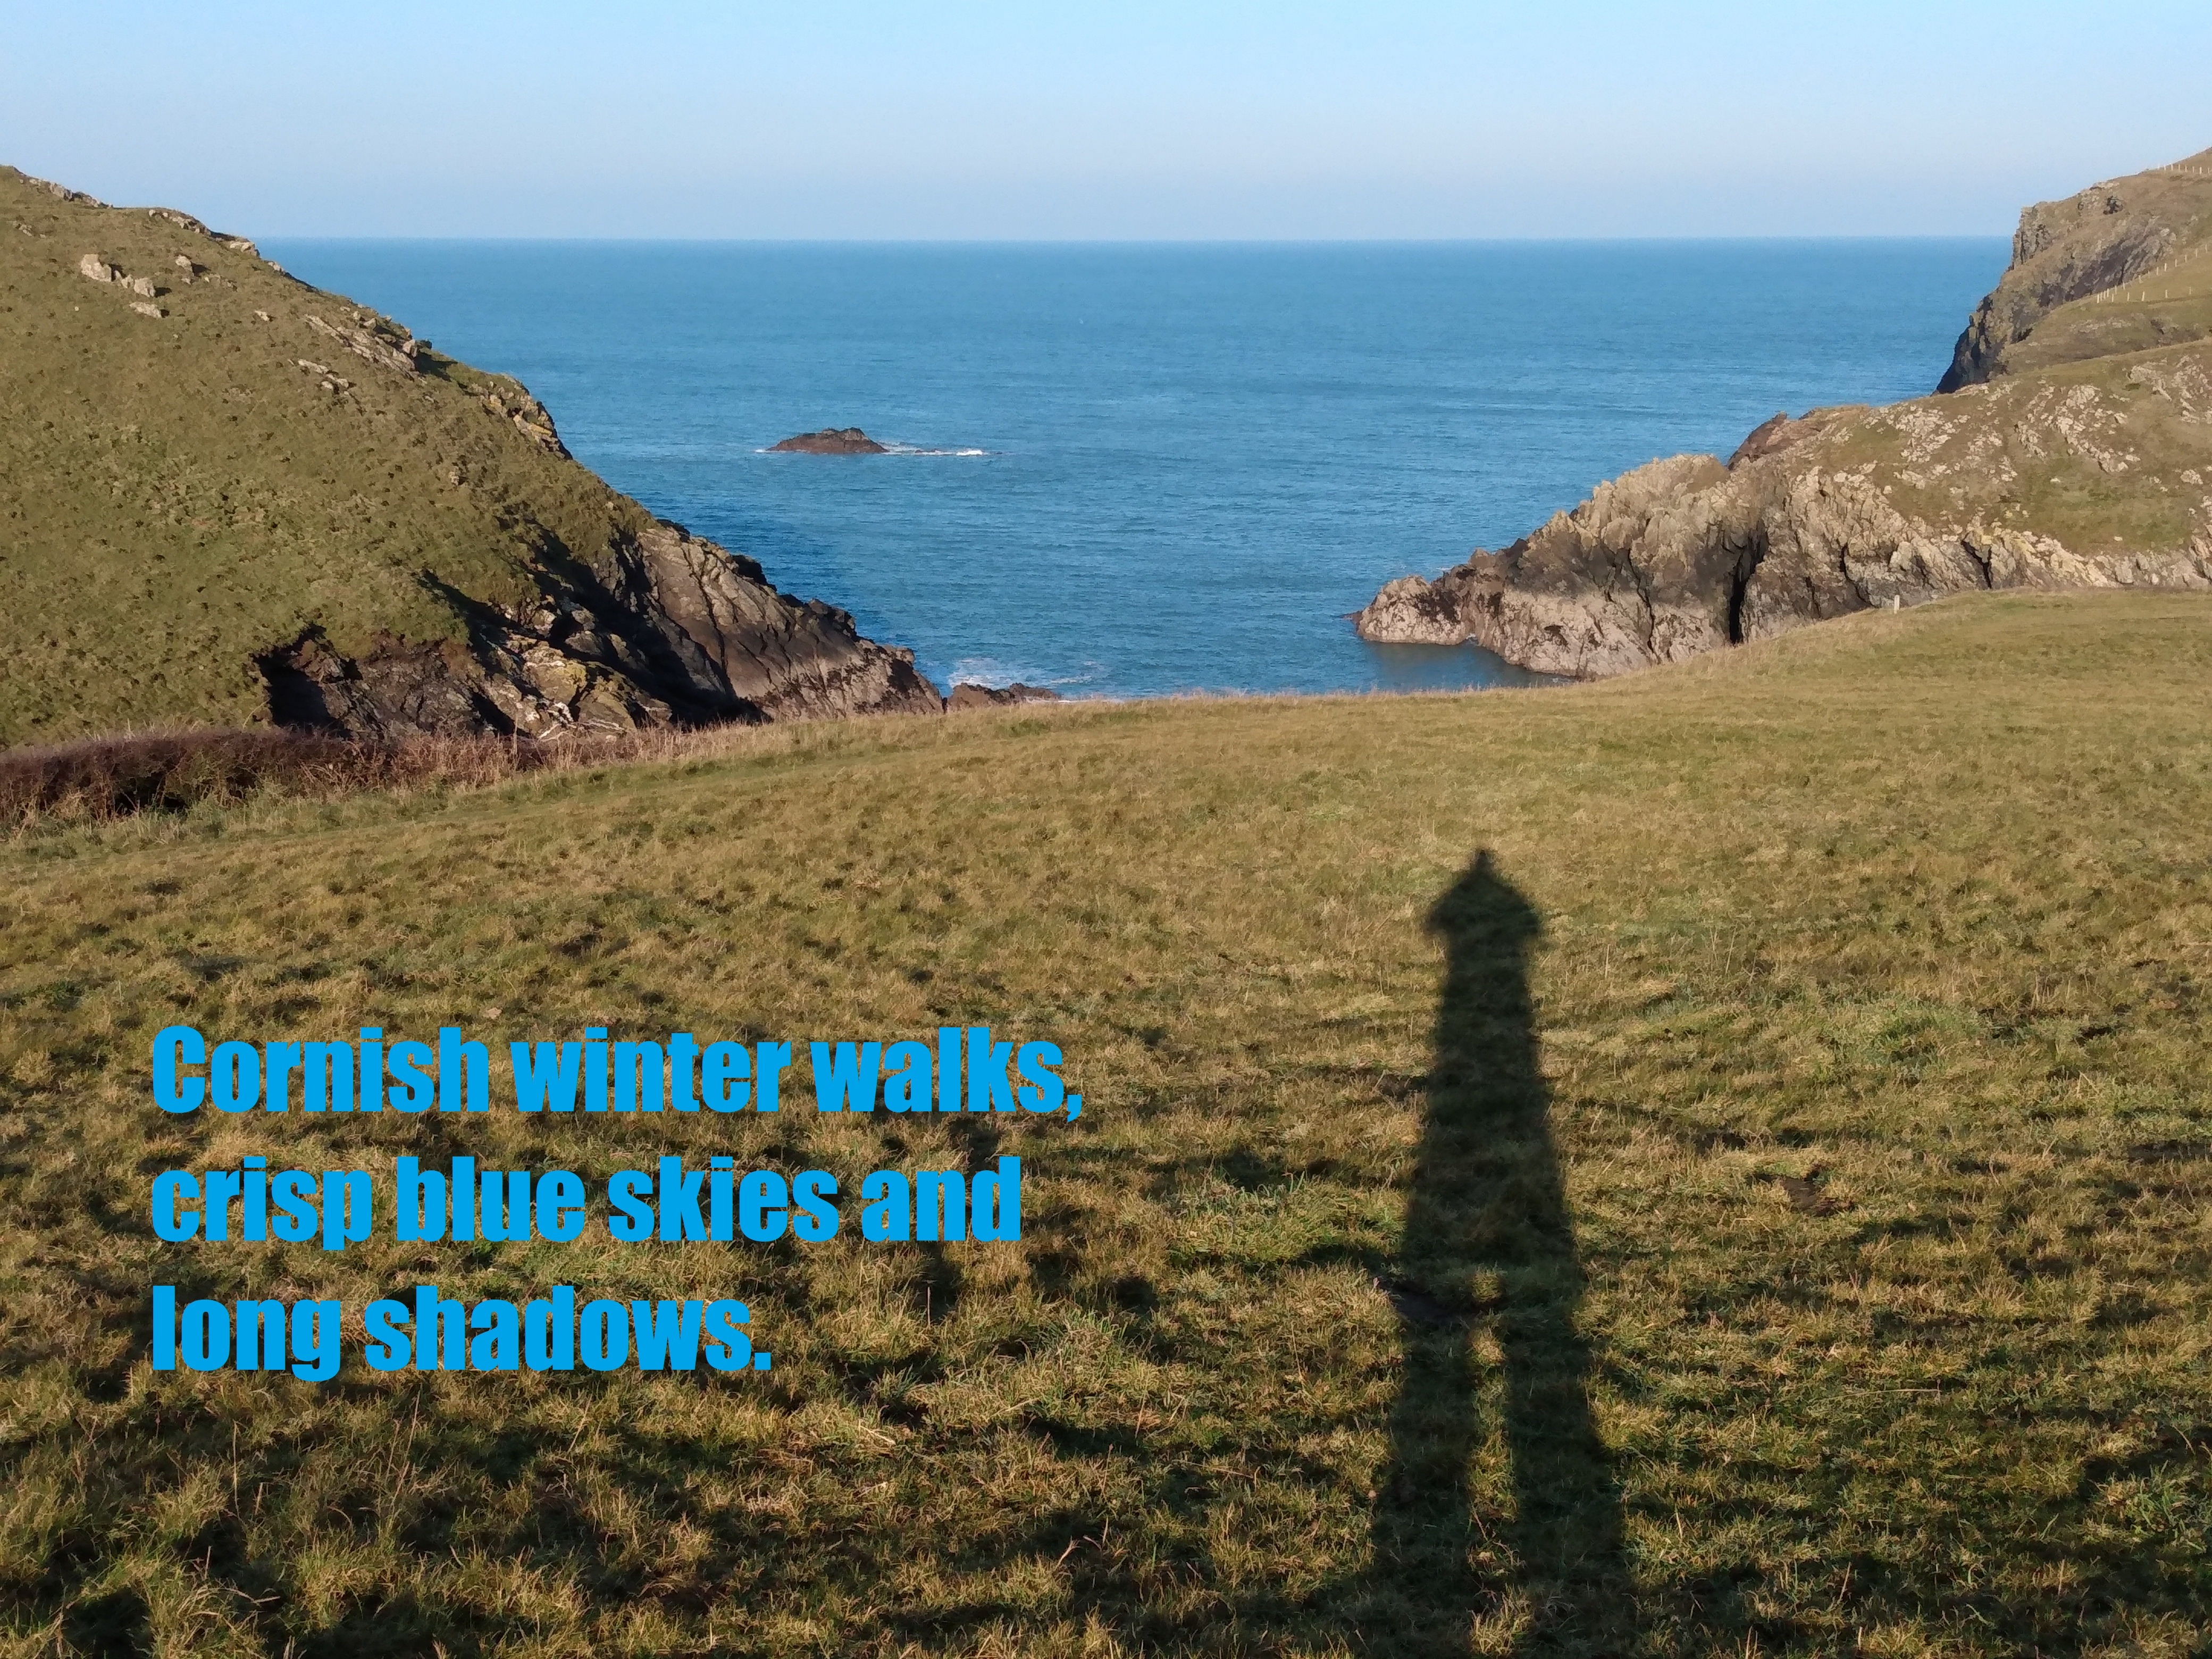 Cornish winter walks, crisp blue skies and long shadows.